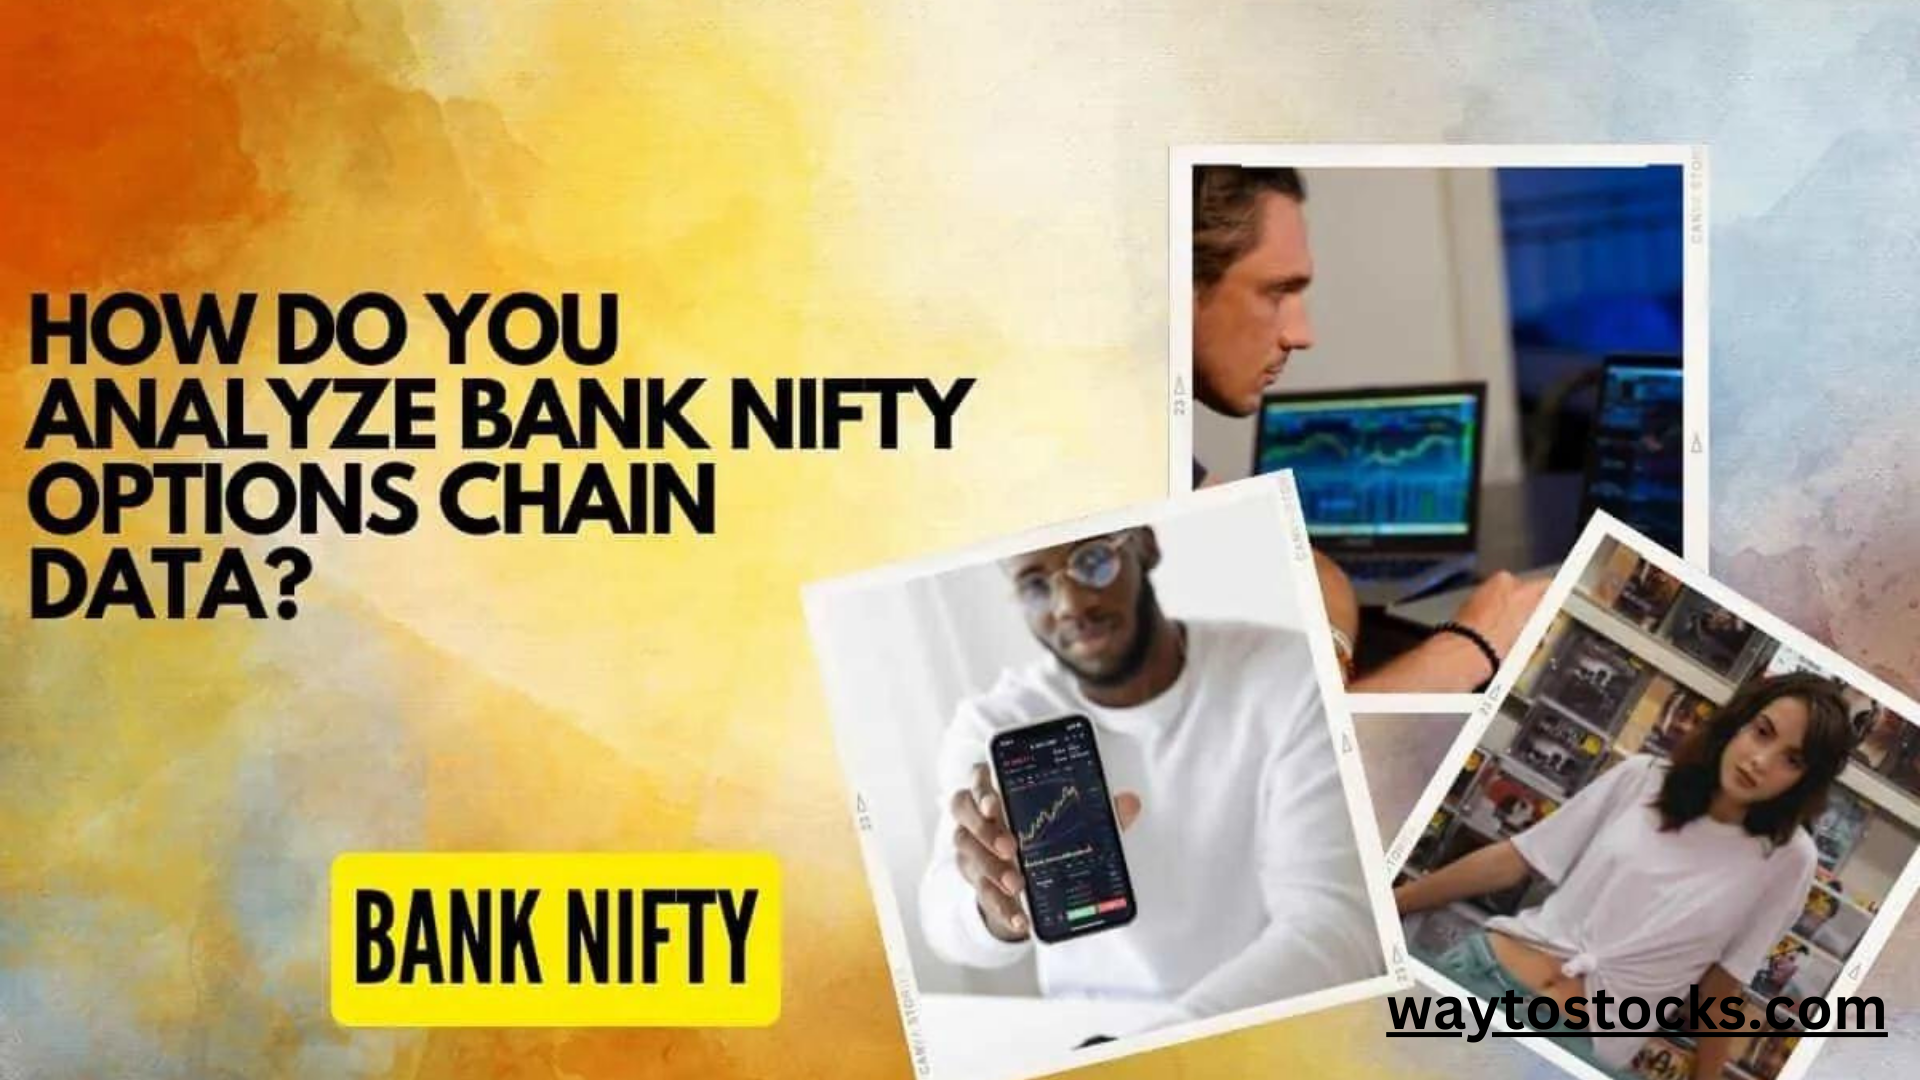 Bank Nifty option chain